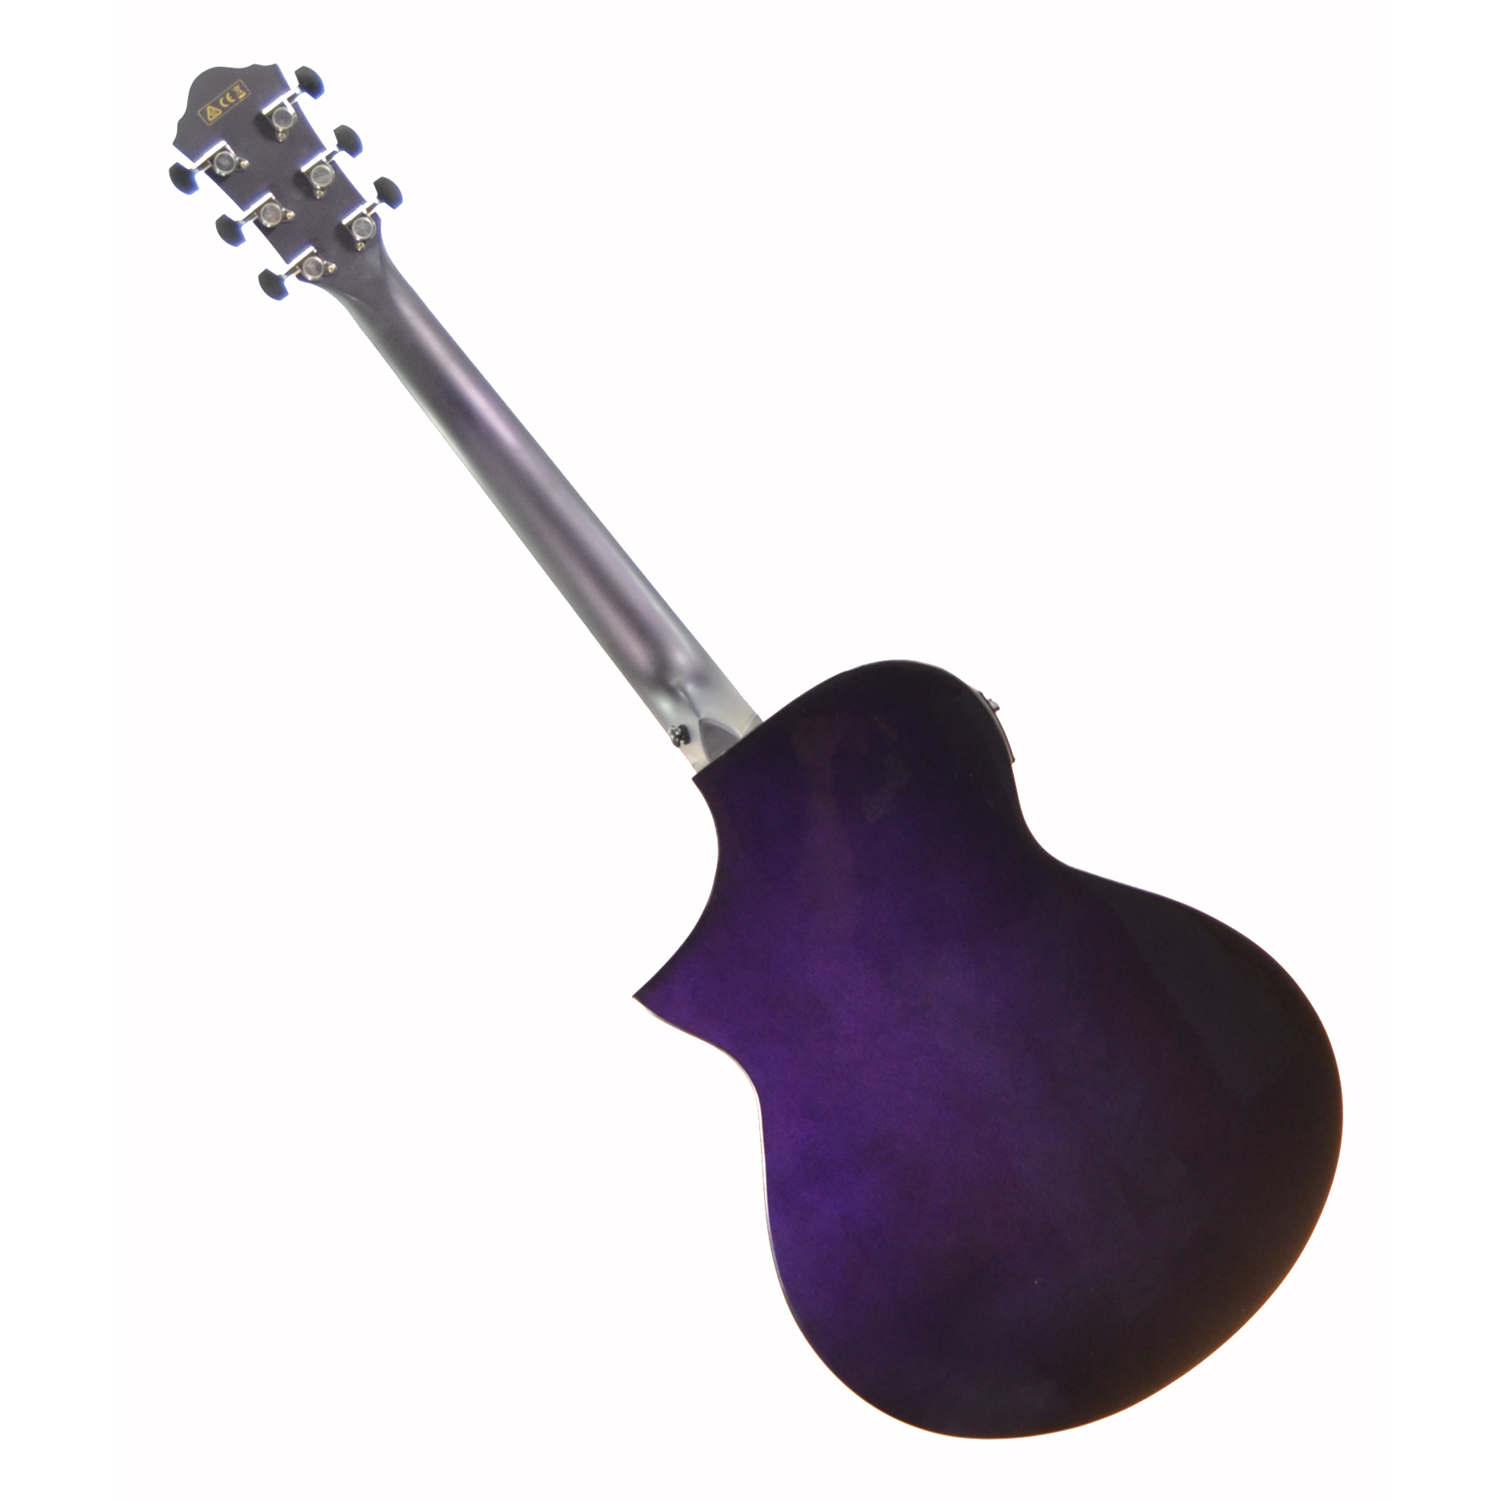 Ibanez AEWC10 - Night Metallic Purple Acoustic Electric Guitar